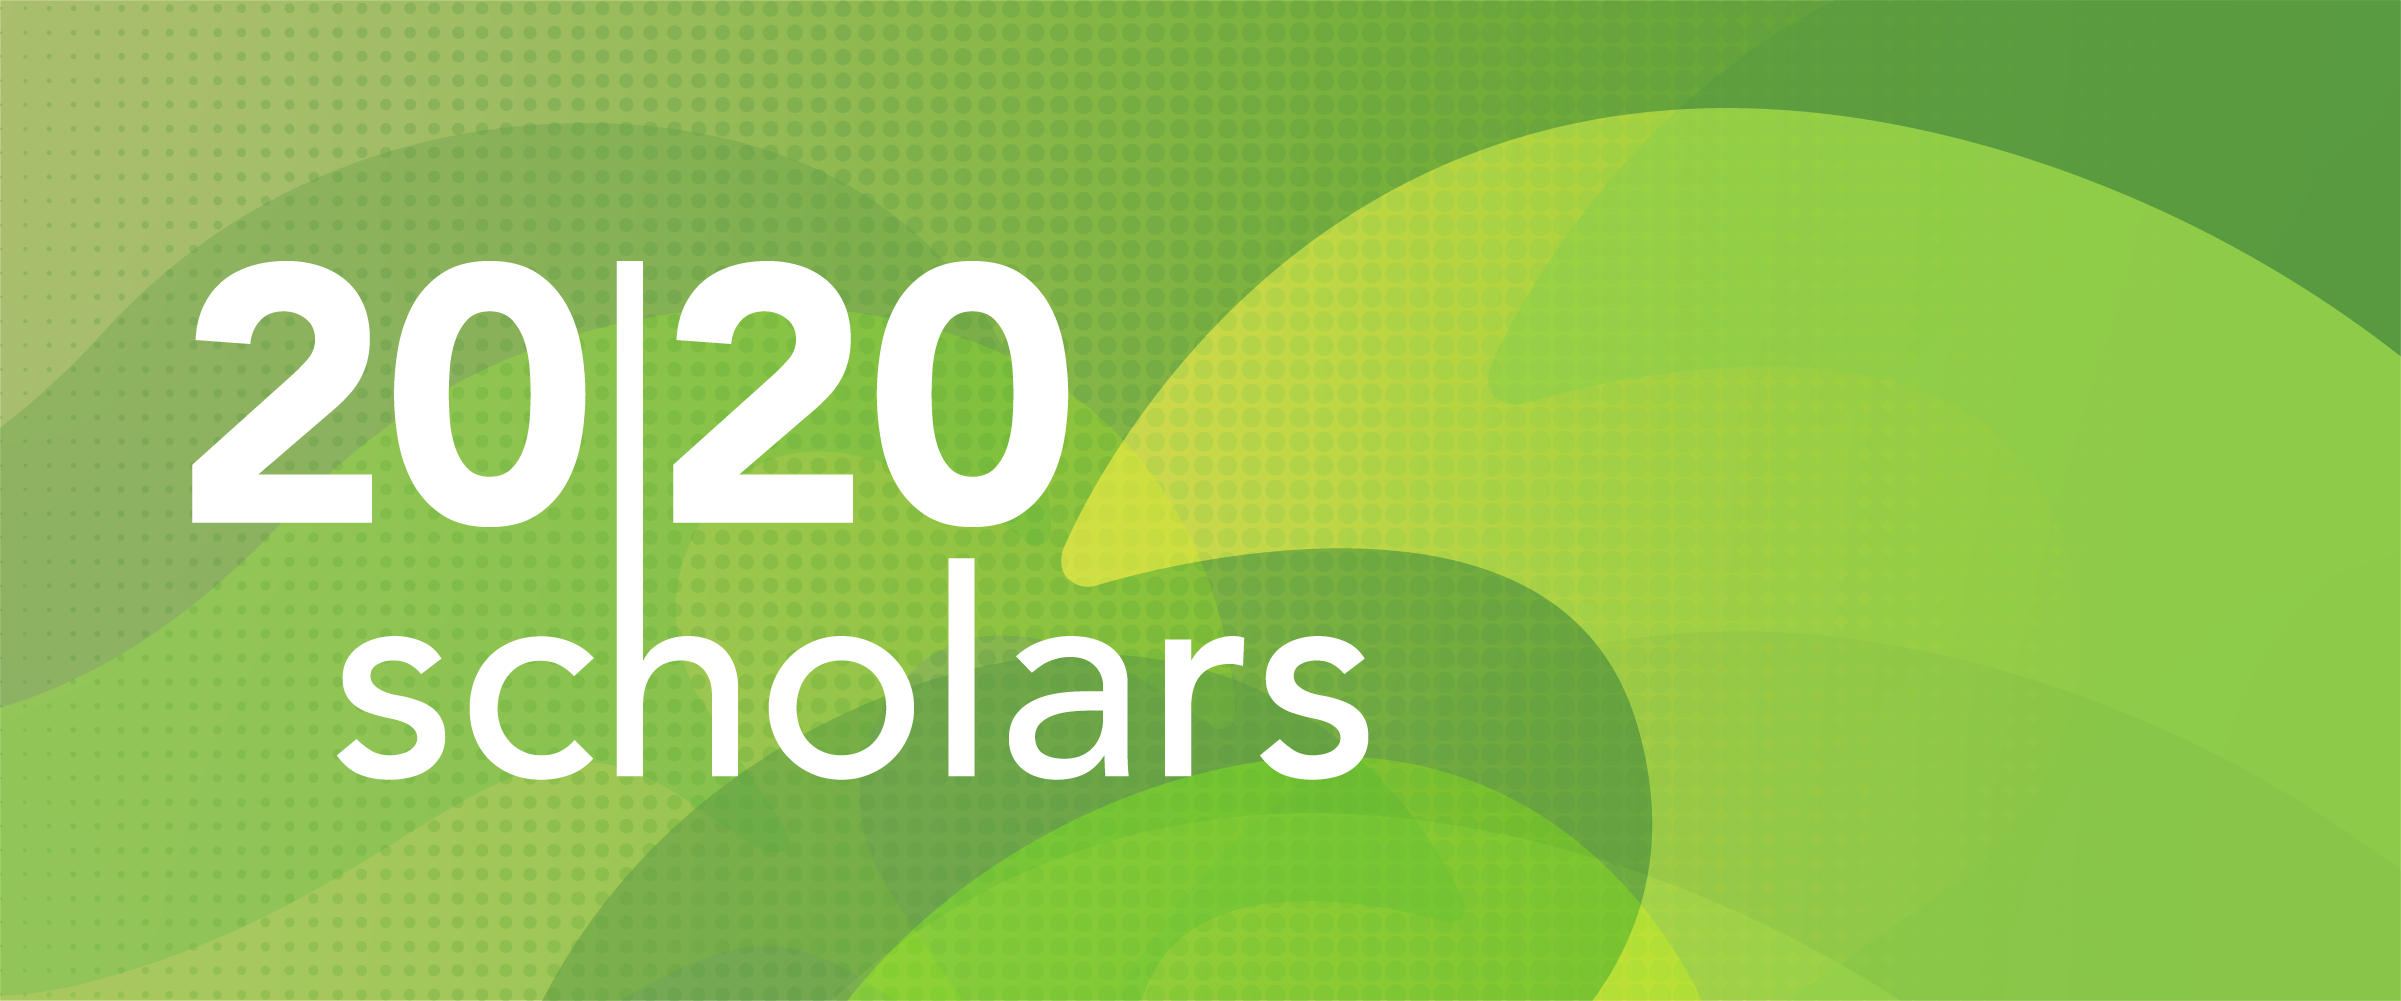 Decorative banner for 20|20 Scholars program